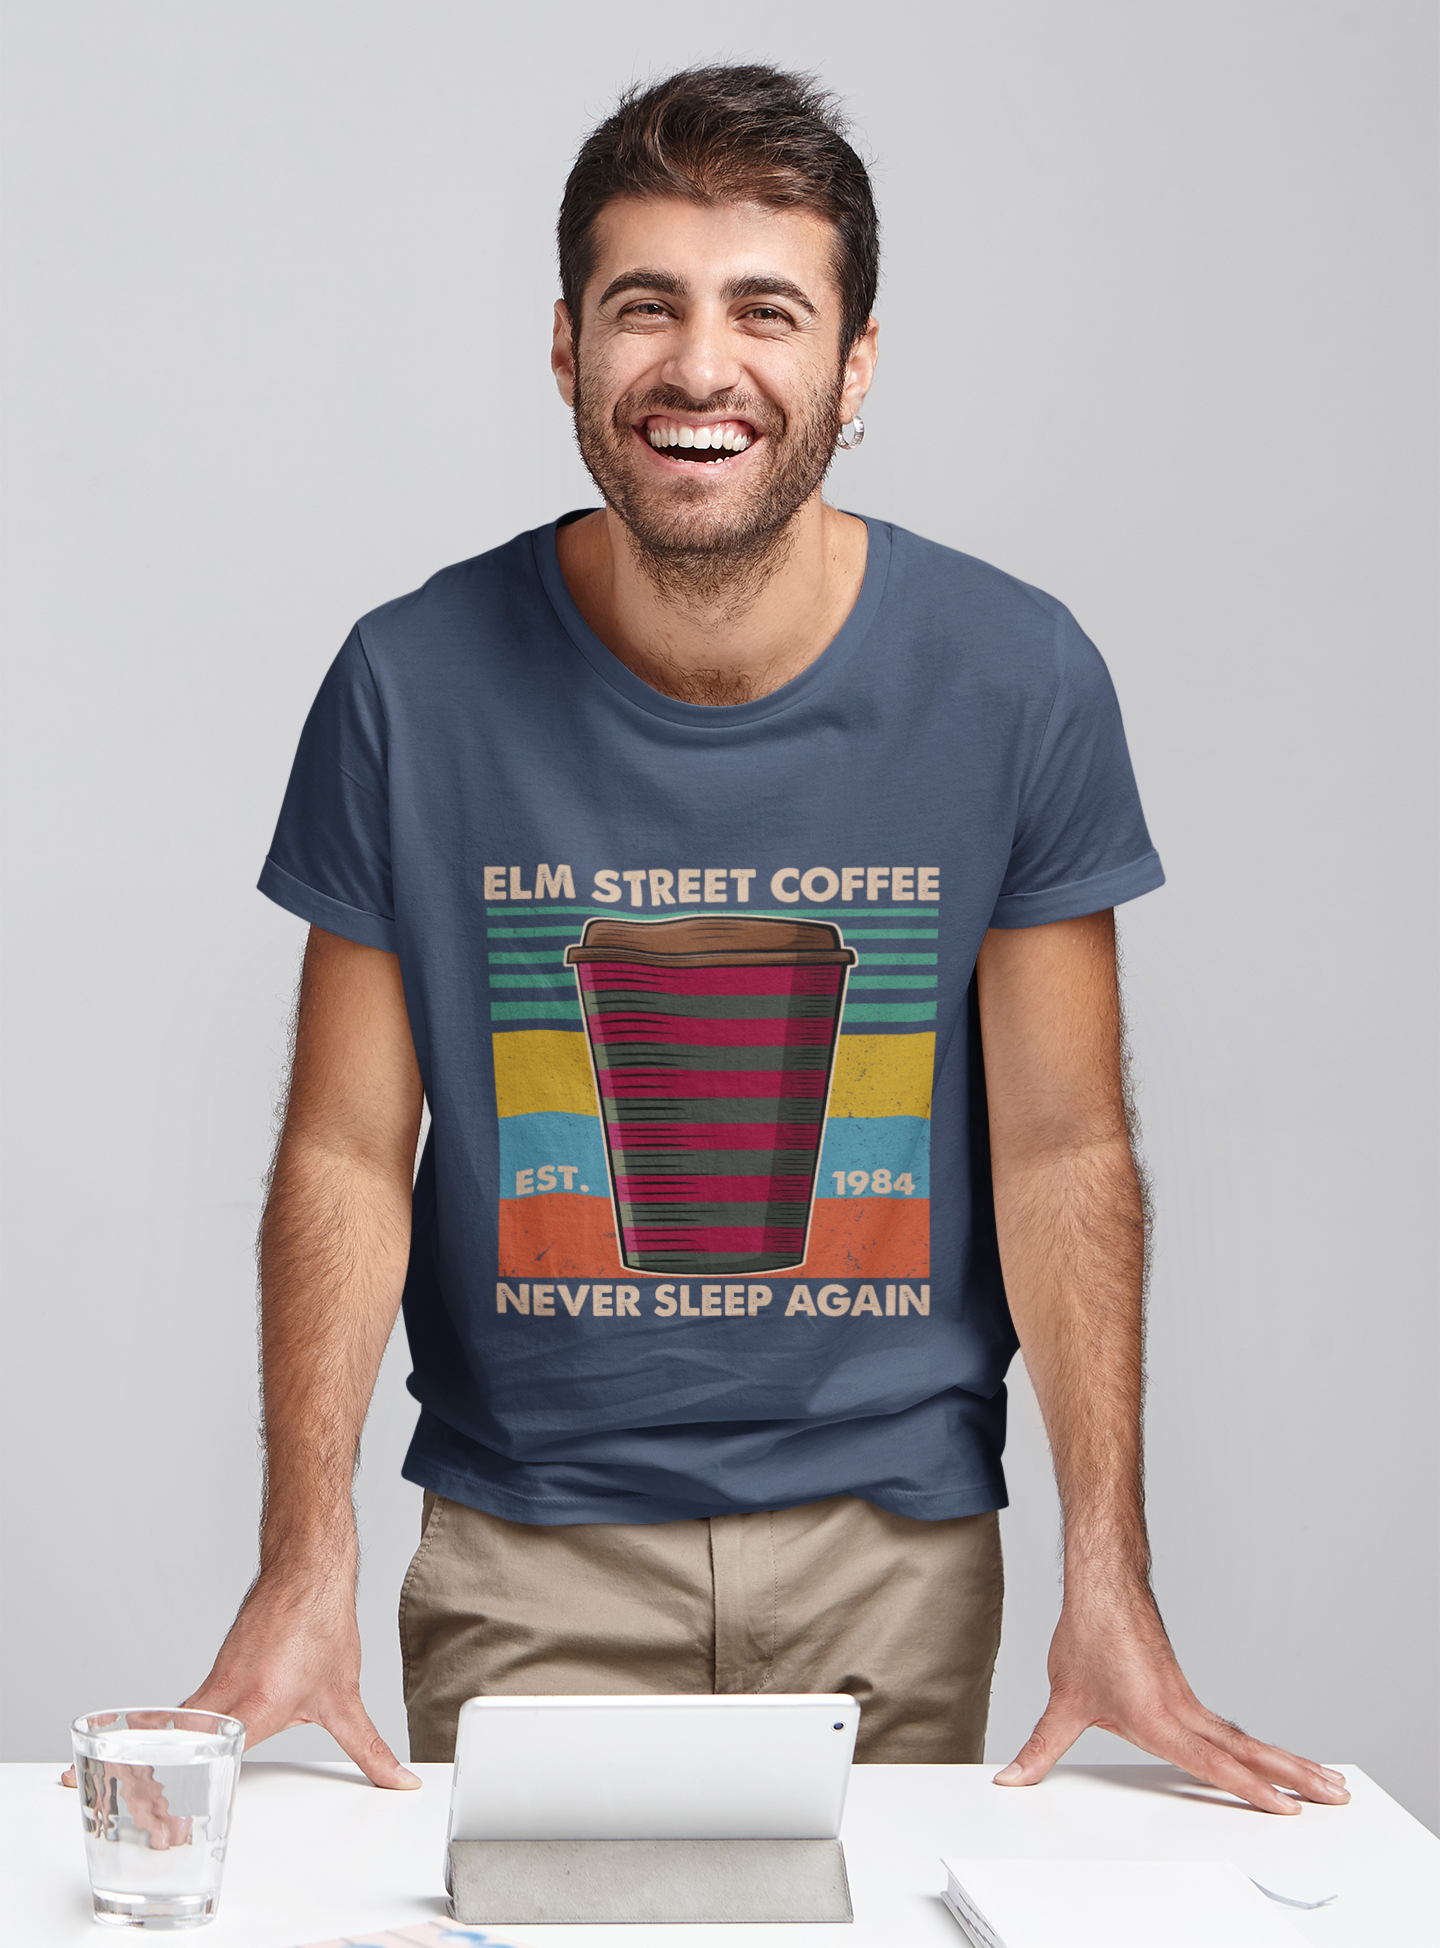 Nightmare On Elm Street Vintage T Shirt, Never Sleep Again Tshirt,, Elm Street Coffee T Shirt Halloween Gifts